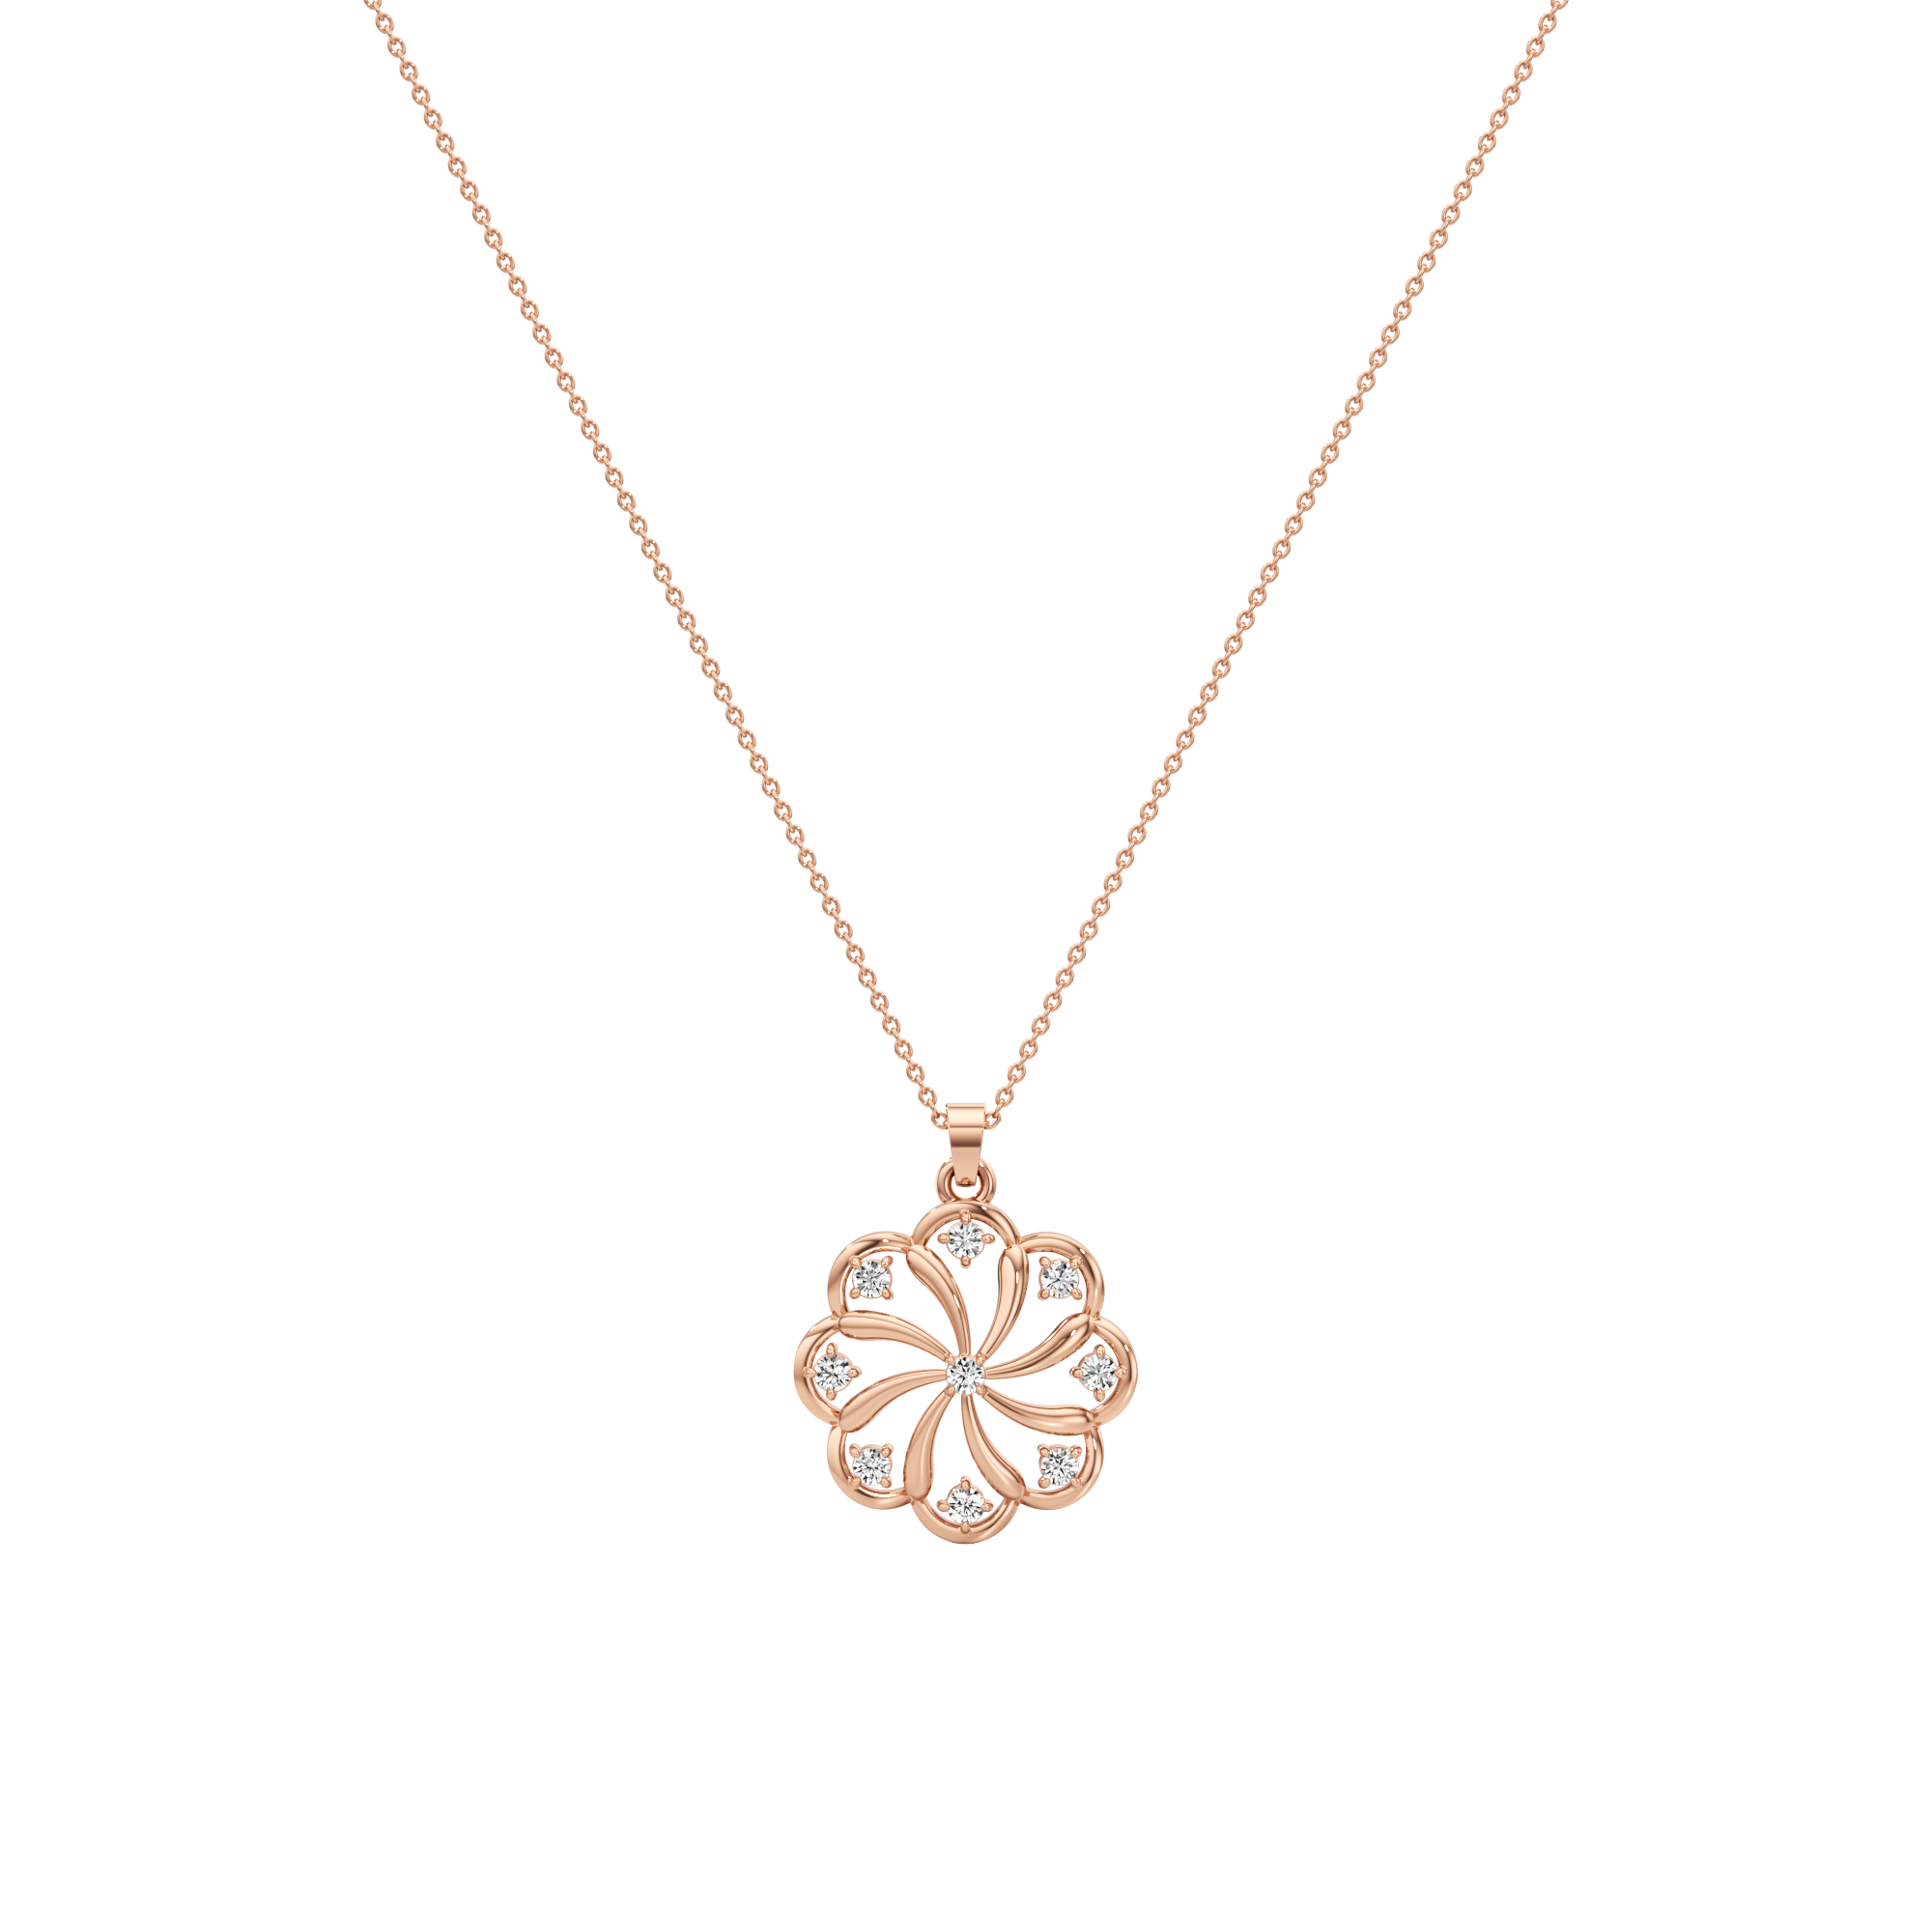 Necklace online in Silver for women | Silverlinings | Handmade Filigree